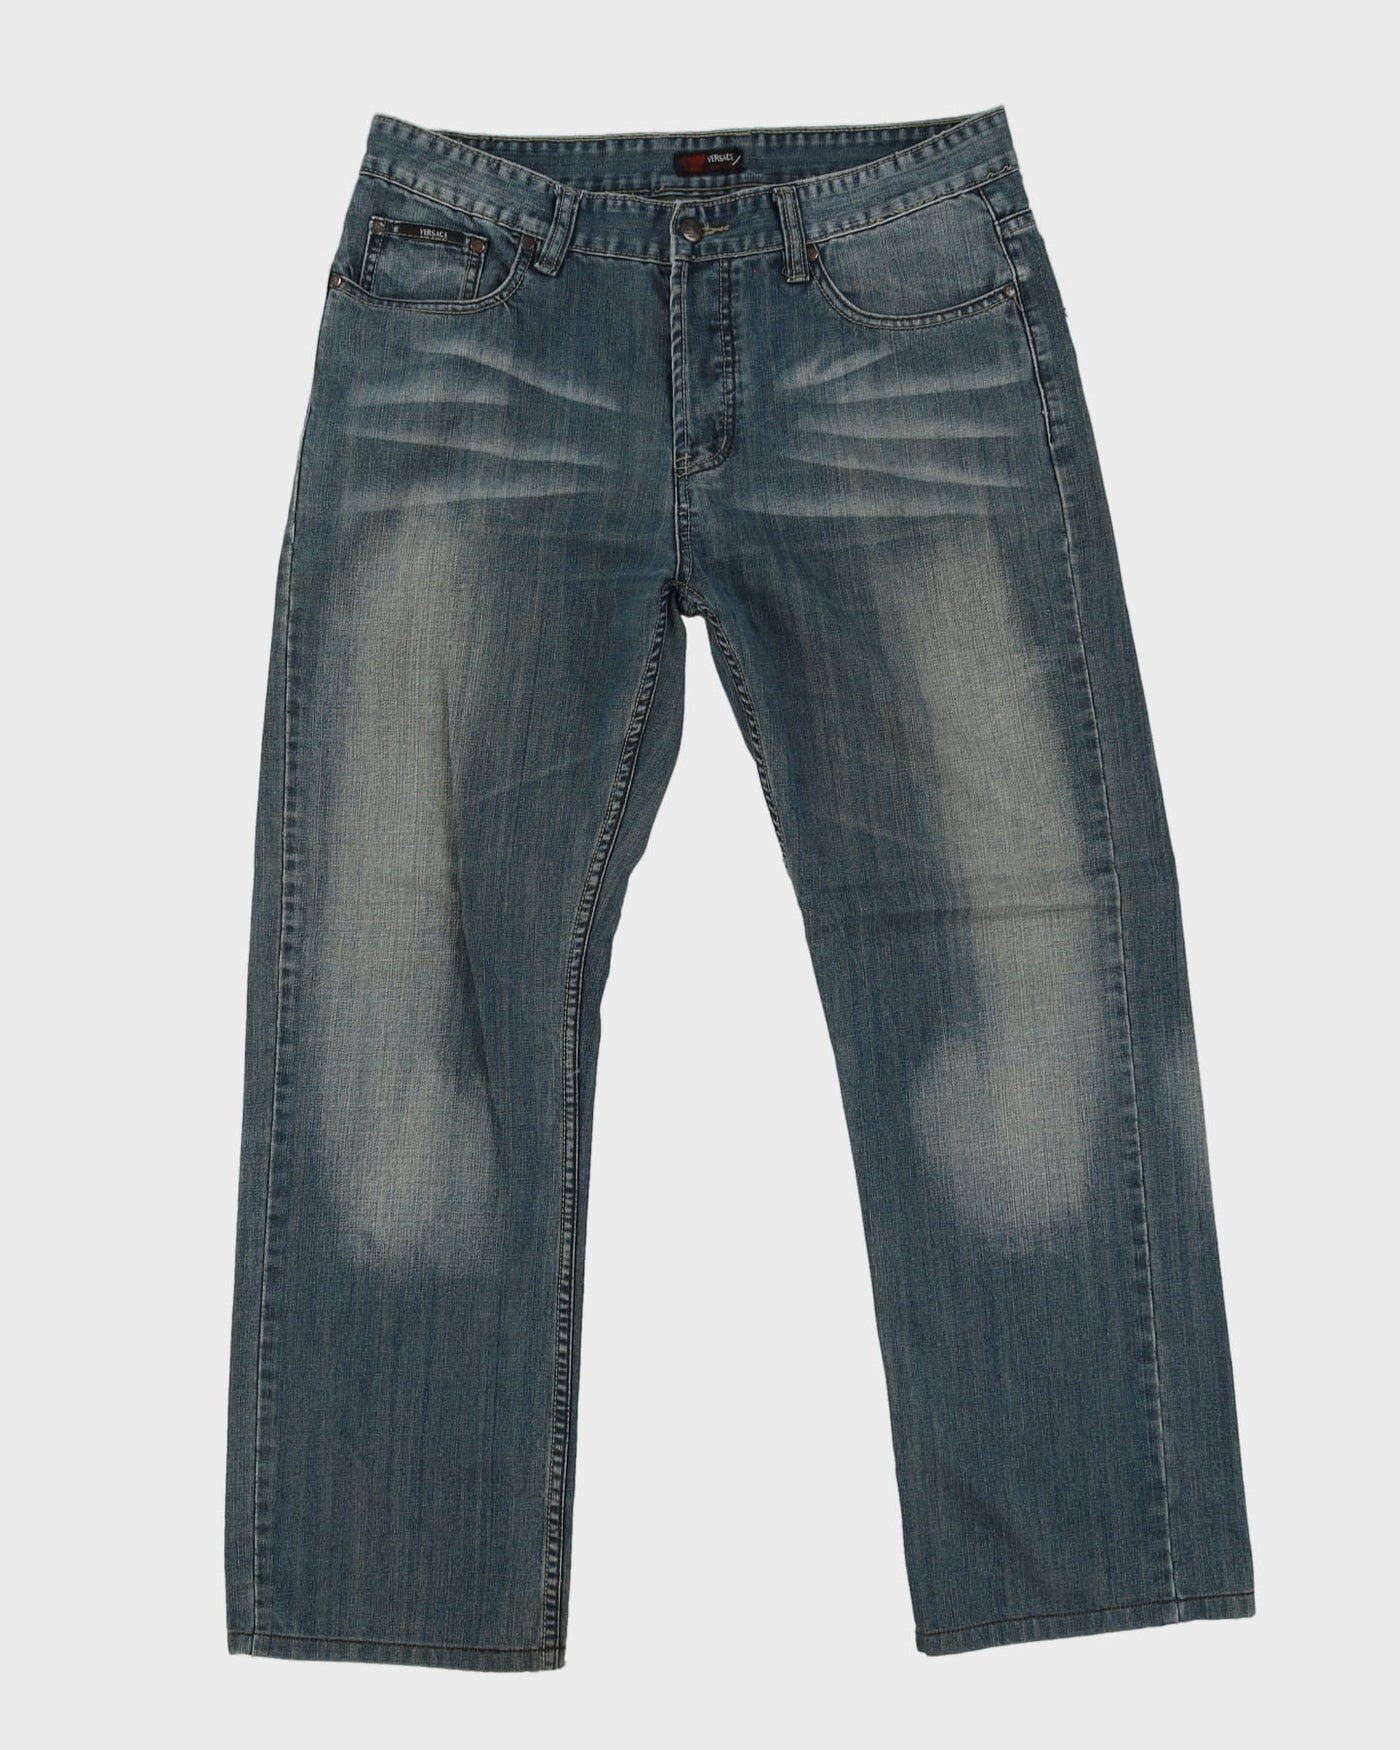 00s Versace Sport Blue Jeans - W38 L30